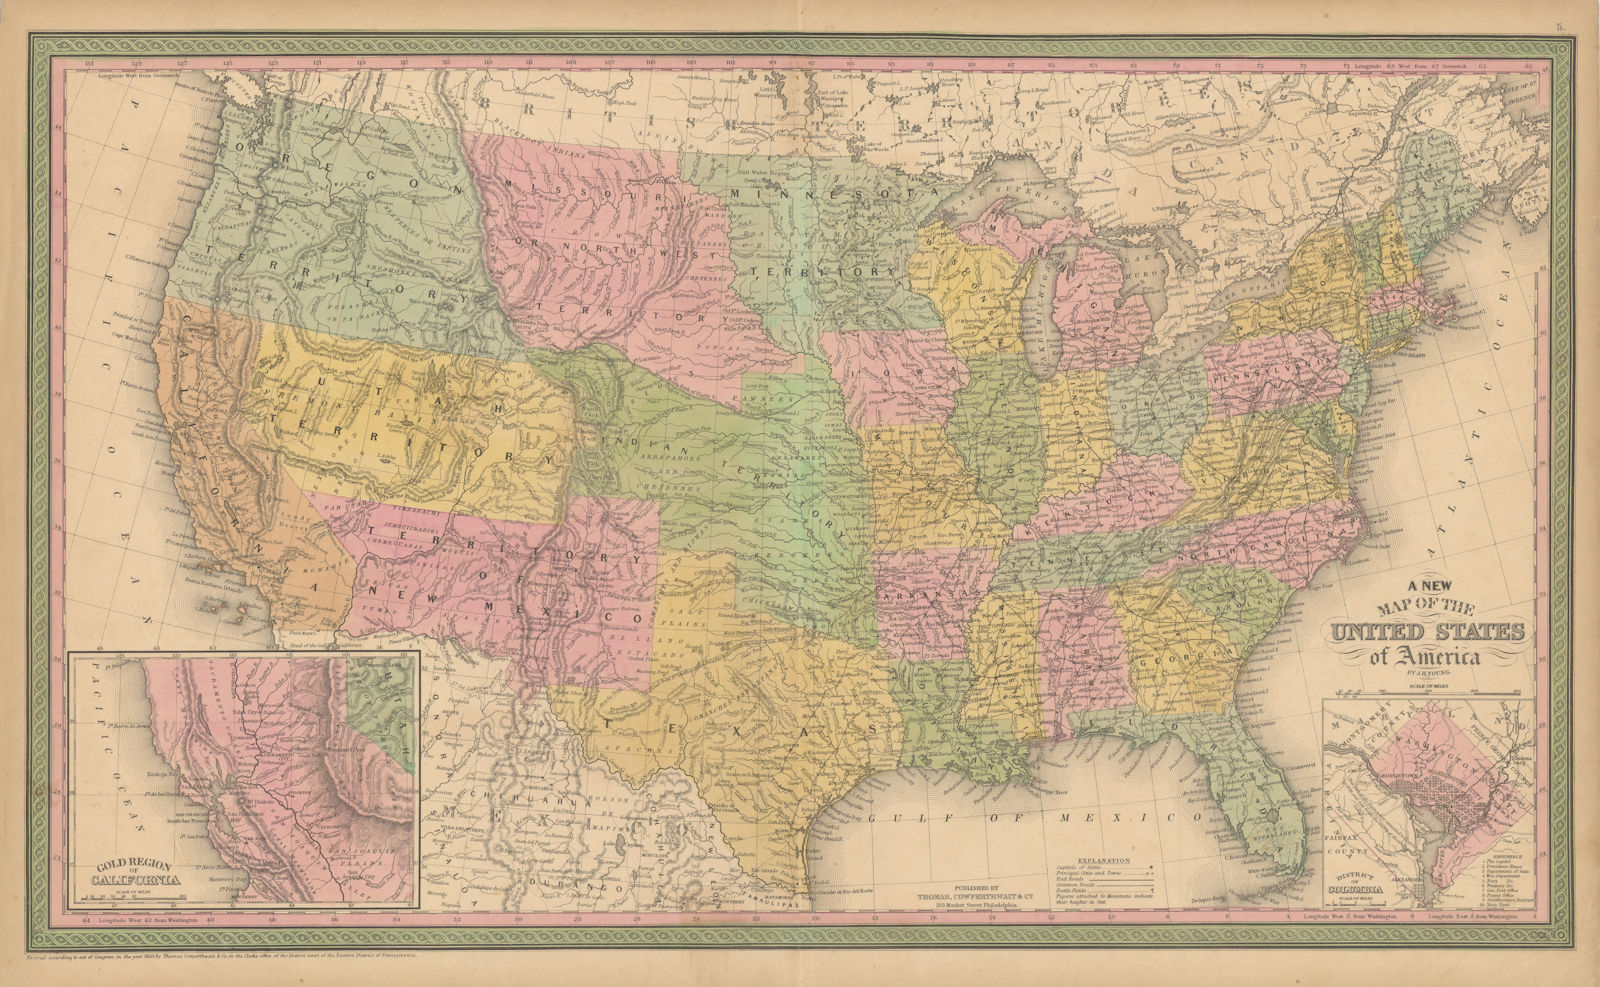 United States of America. California Gold region. THOMAS, COWPERTHWAIT 1852 map